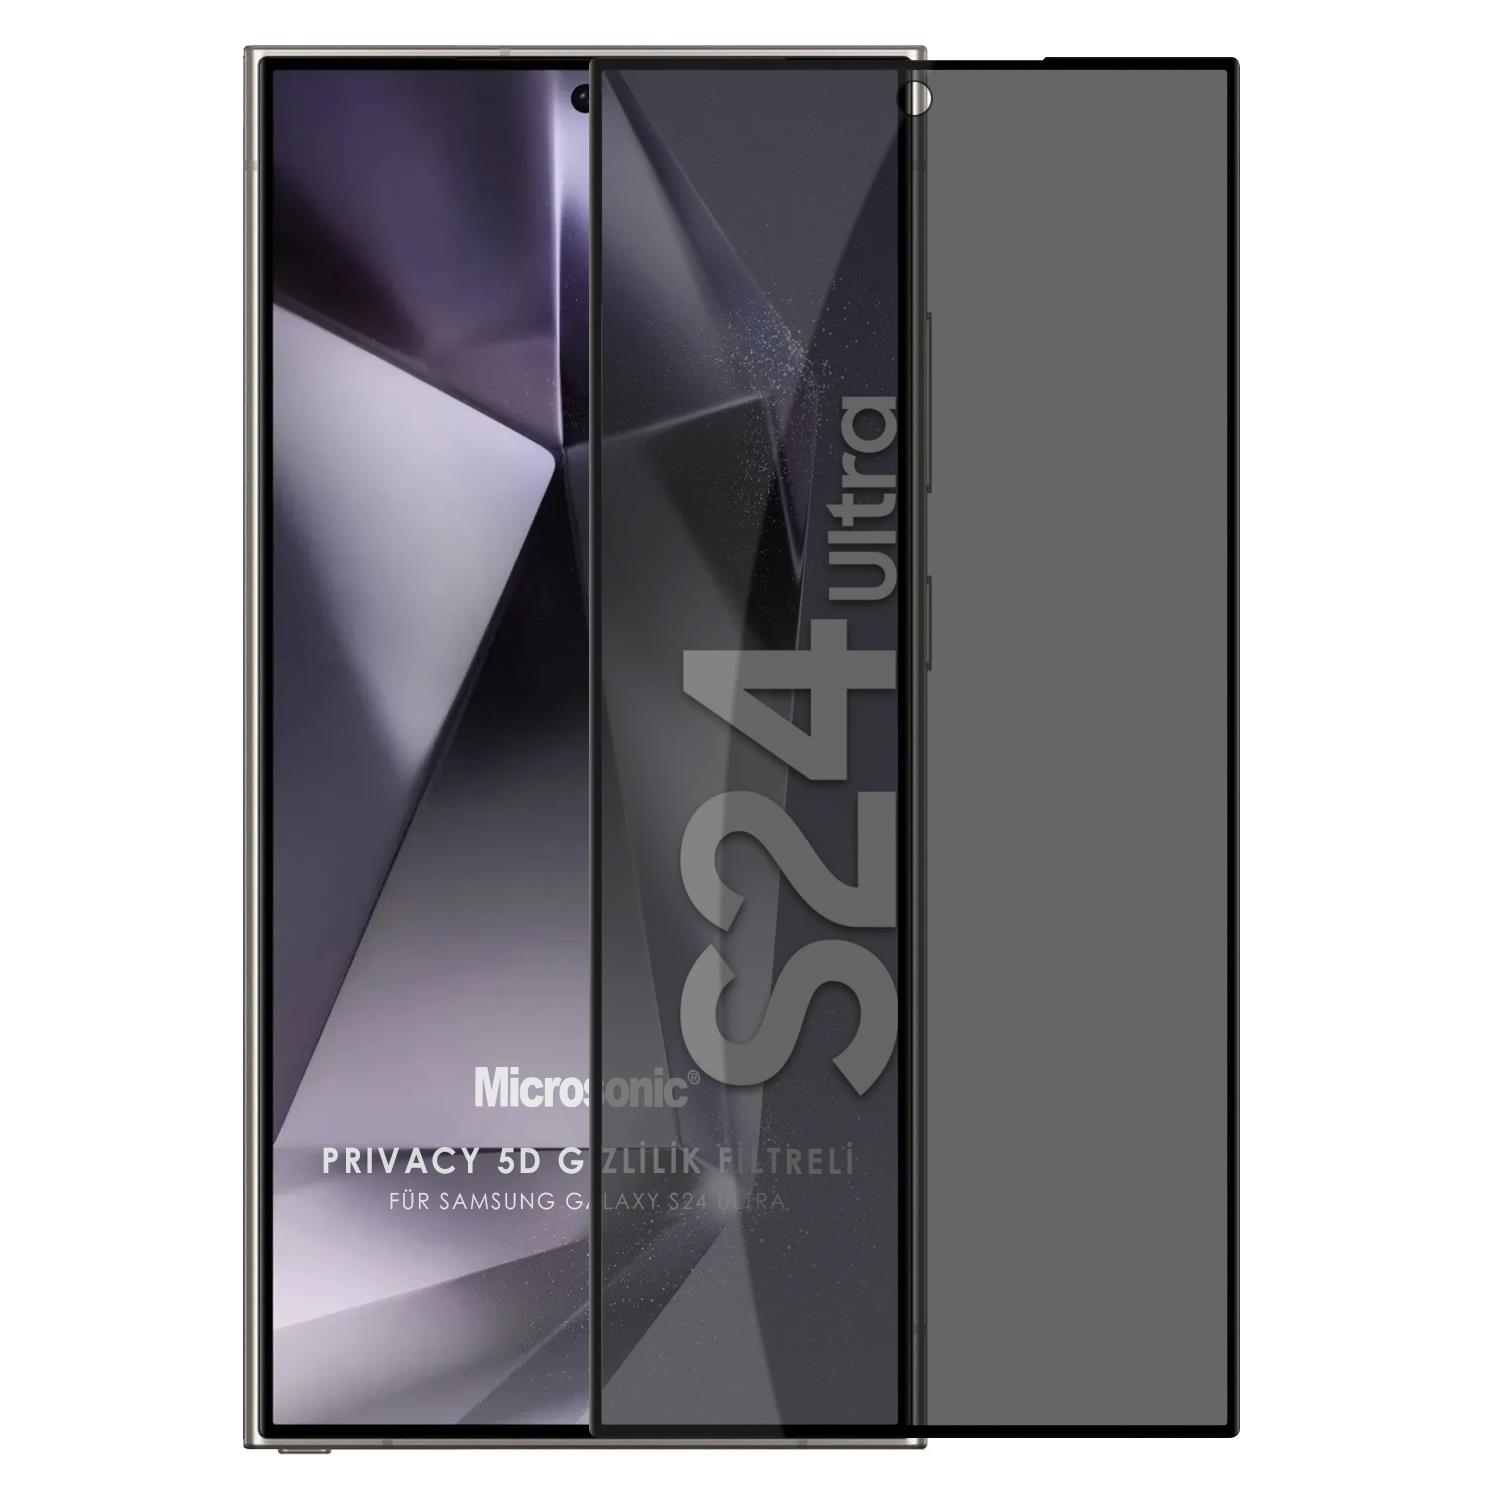 Microsonic Samsung Galaxy S24 Ultra Privacy 5D Gizlilik Filtreli Cam Ekran Koruyucu Siyah